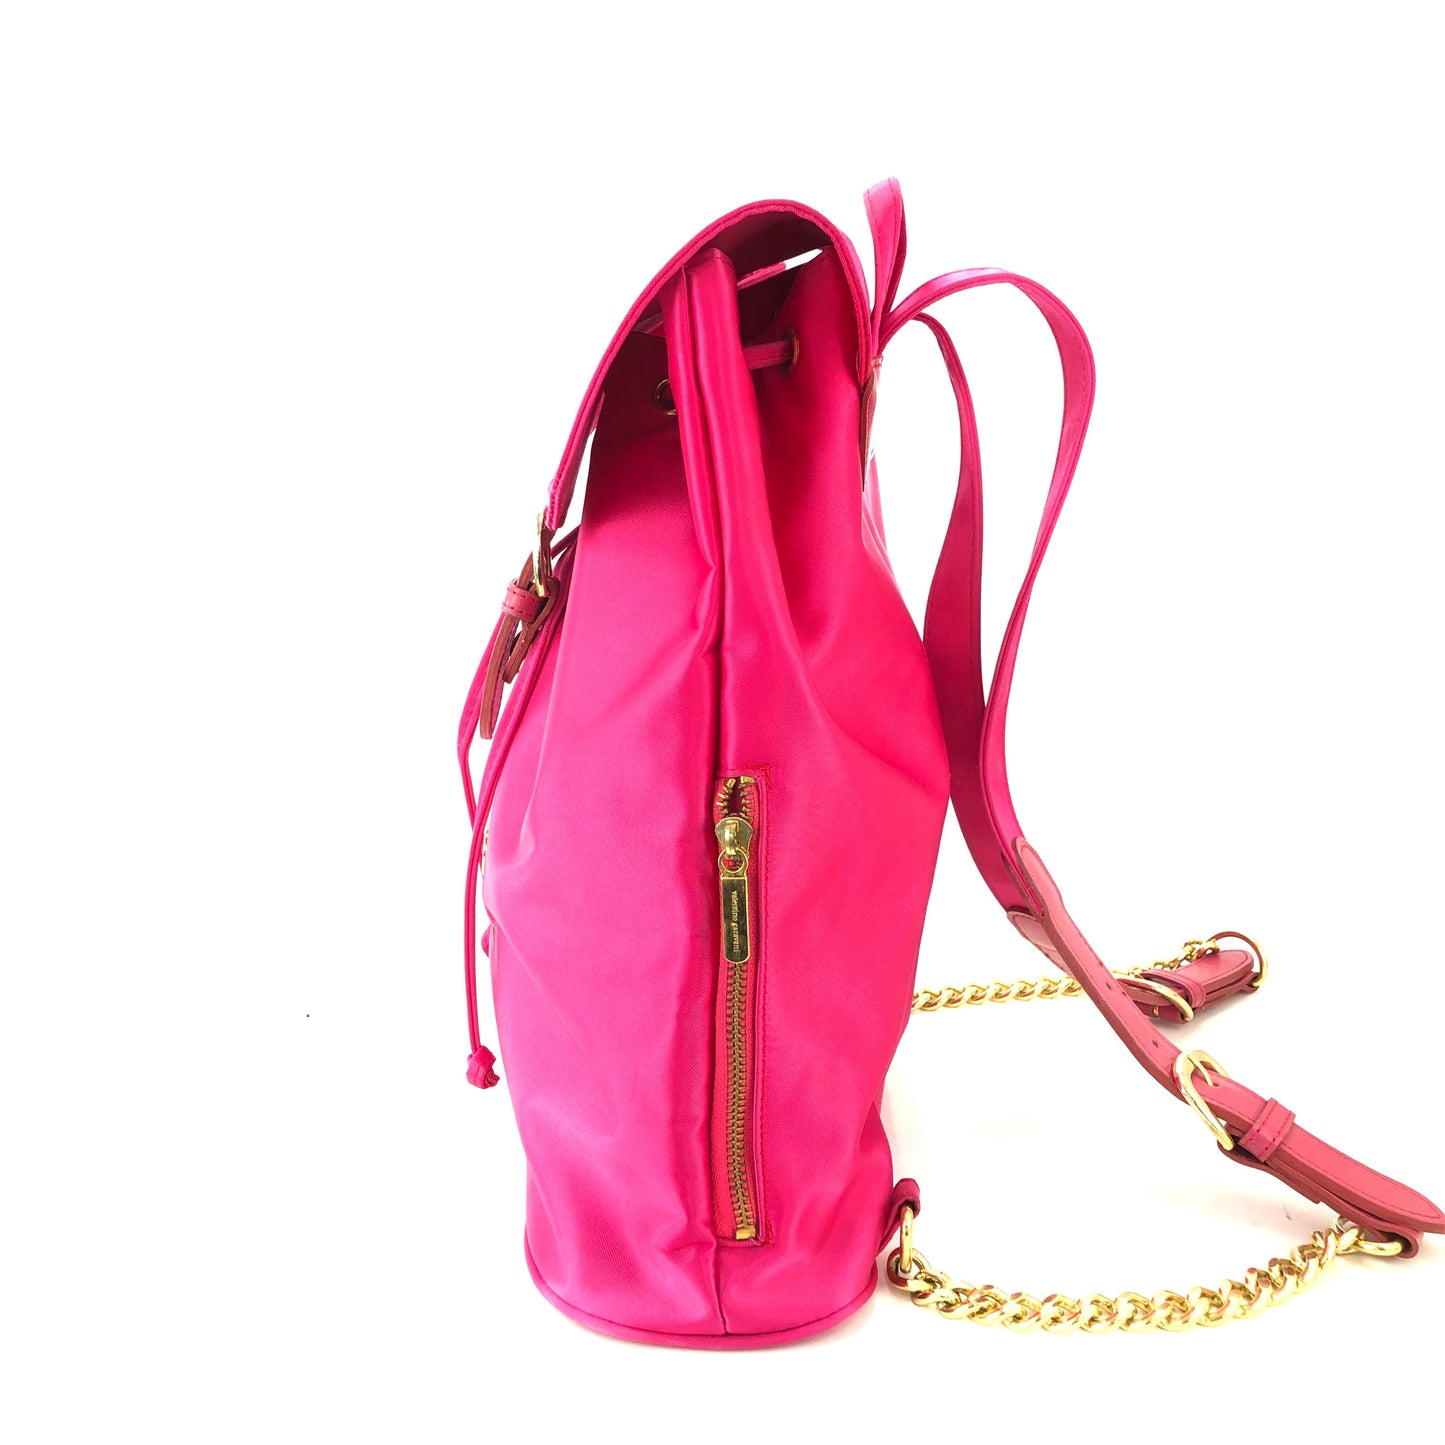 VALENTINO GARAVANI Nylon Backpack Pink Vintage Old 3kiw2c